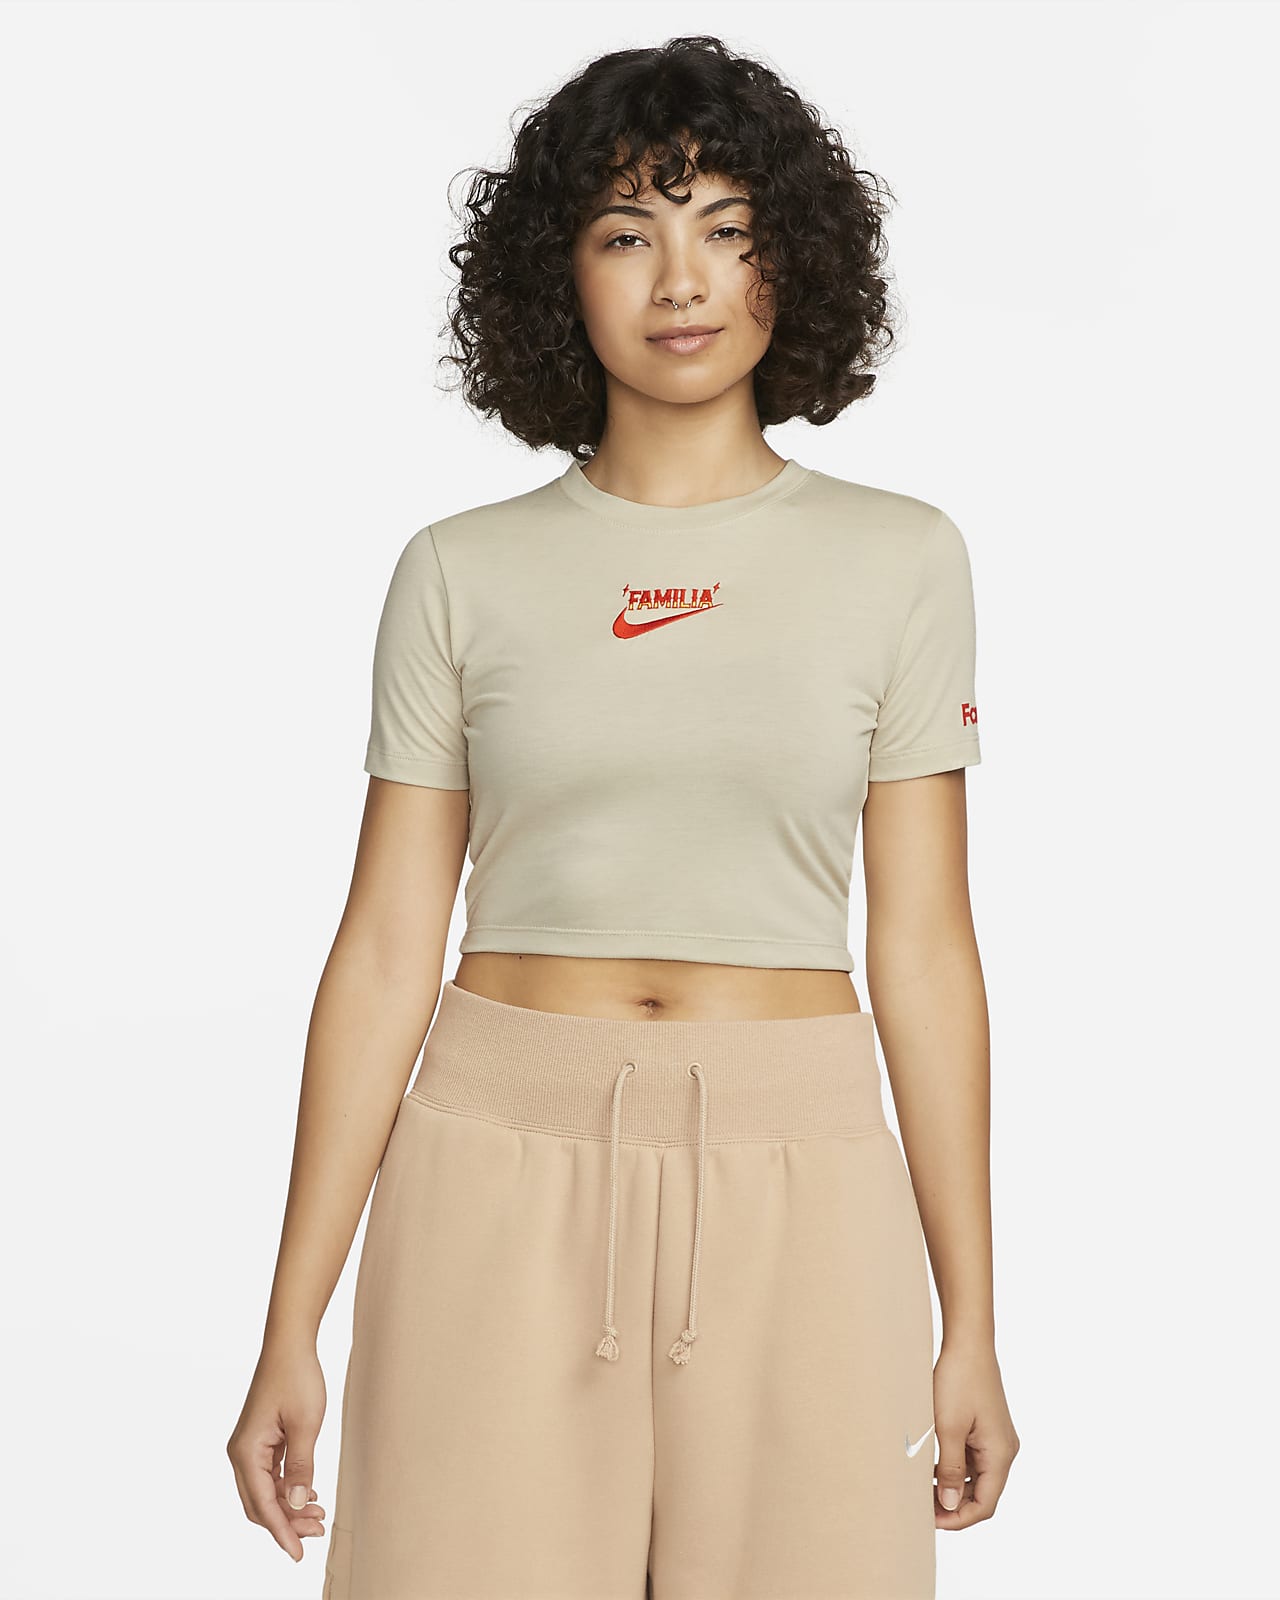 Bekend sofa Waardeloos Nike Sportswear Somos Familia Women's Slim Fit Cropped T-Shirt. Nike.com